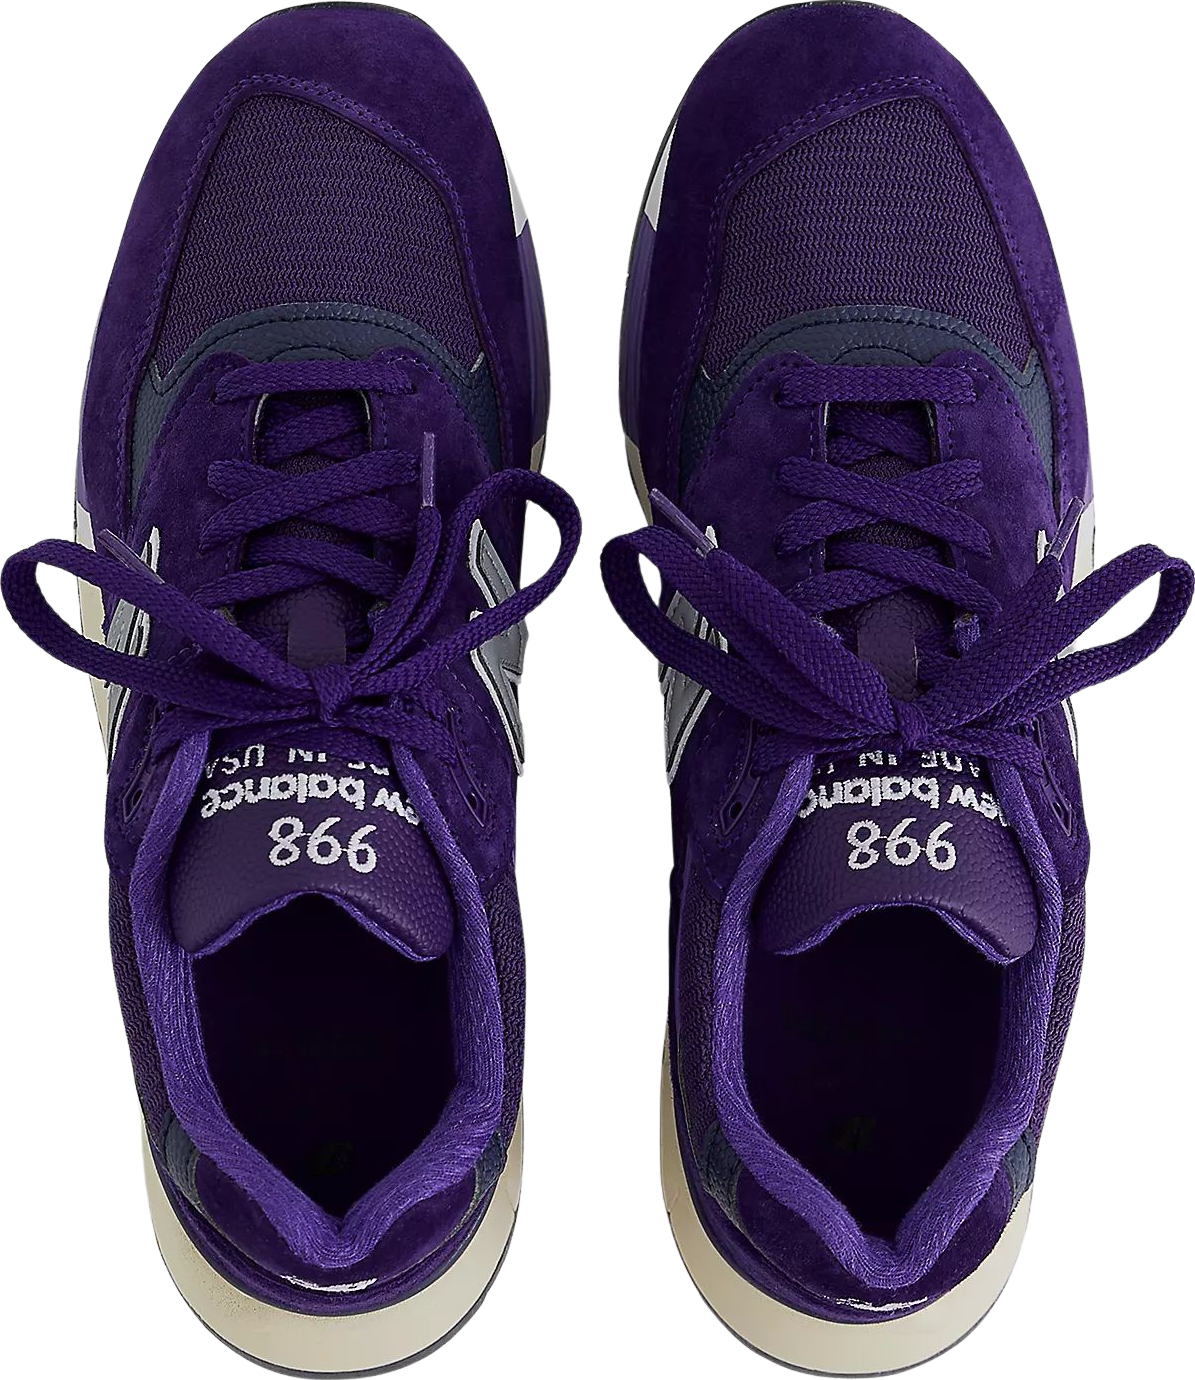 New Balance 998 Plum Purple